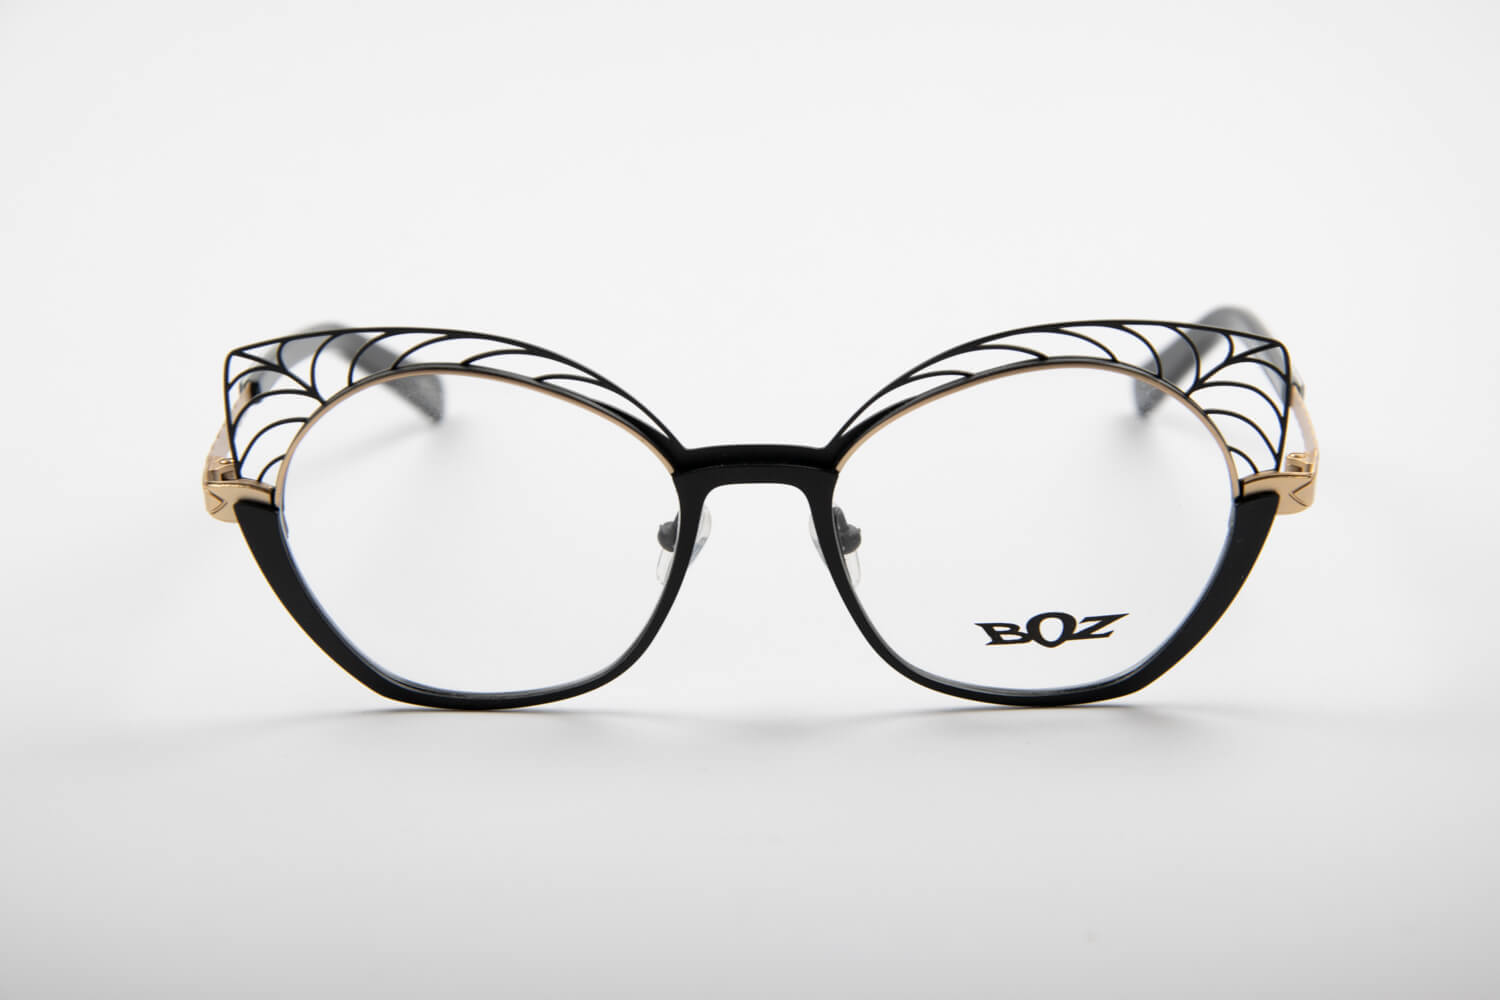 Boz Eyewear | Hipe | Nero e Oro - OTTICA SICOLI